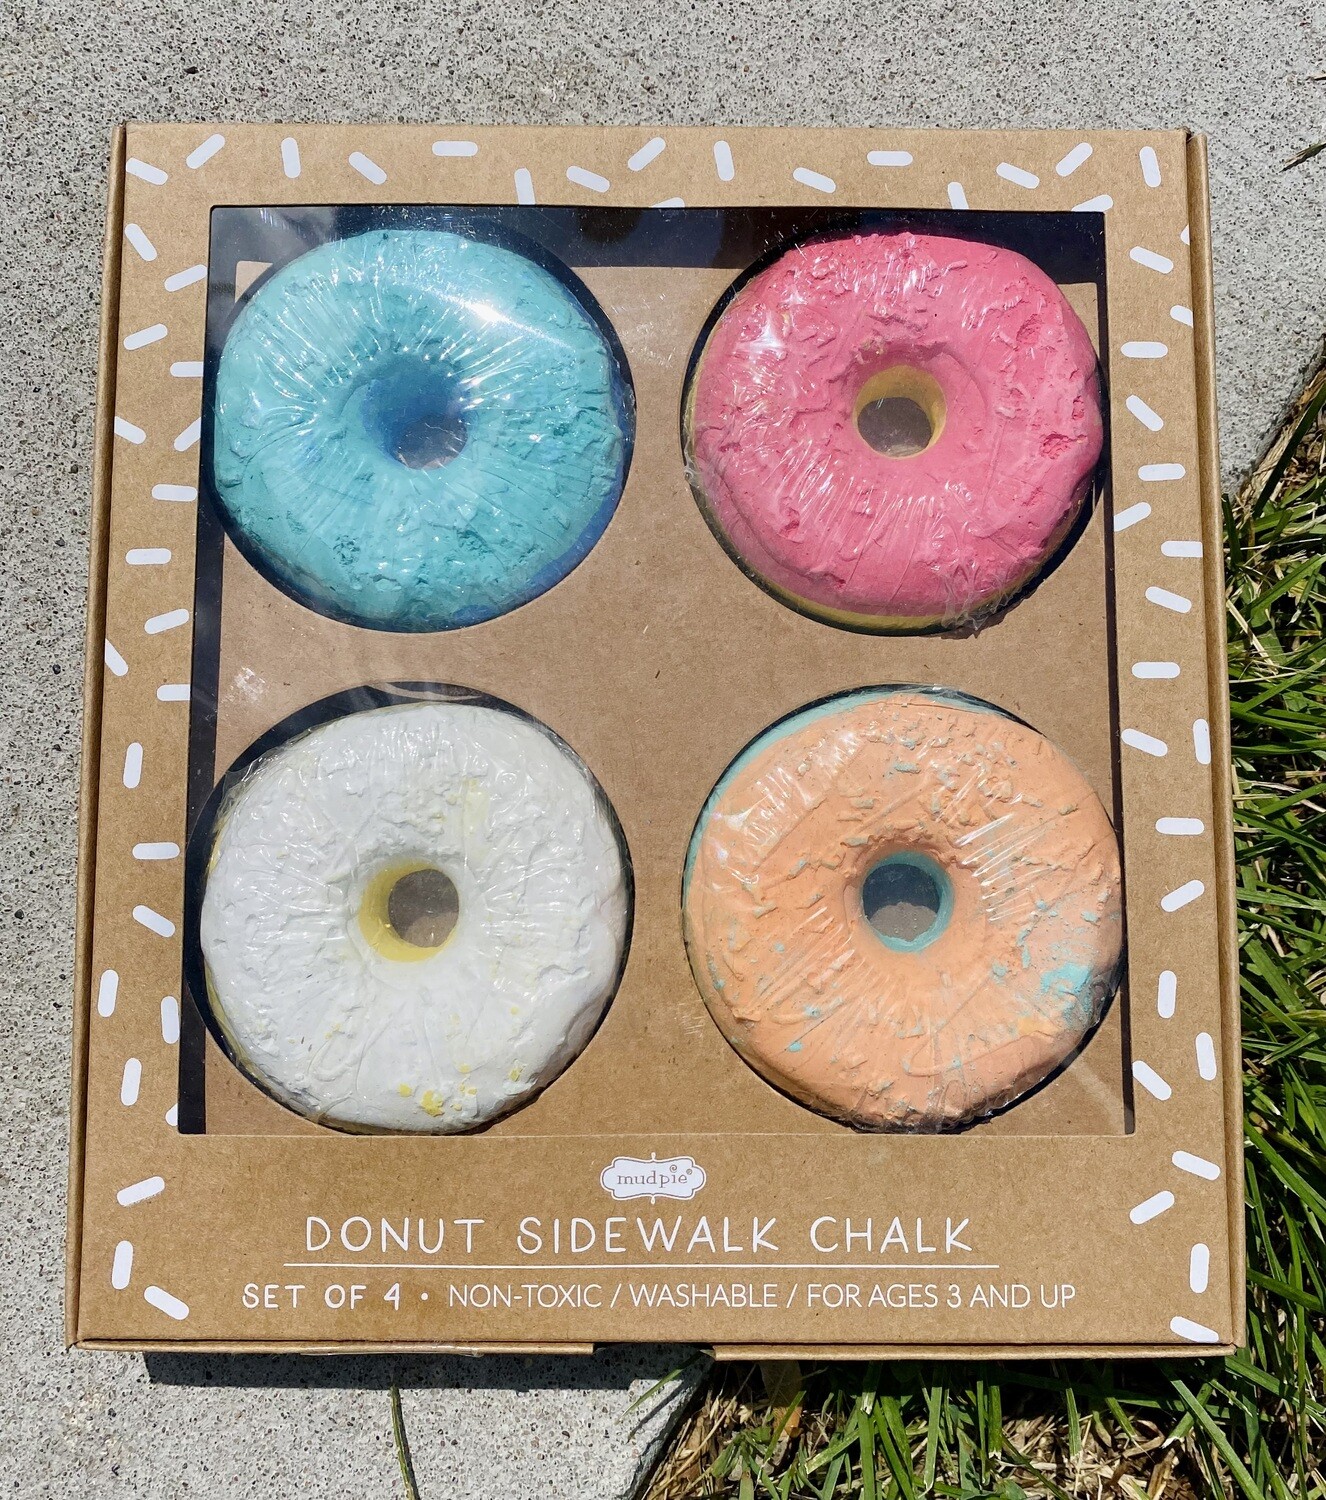 Donuts Sidewalk Chalk